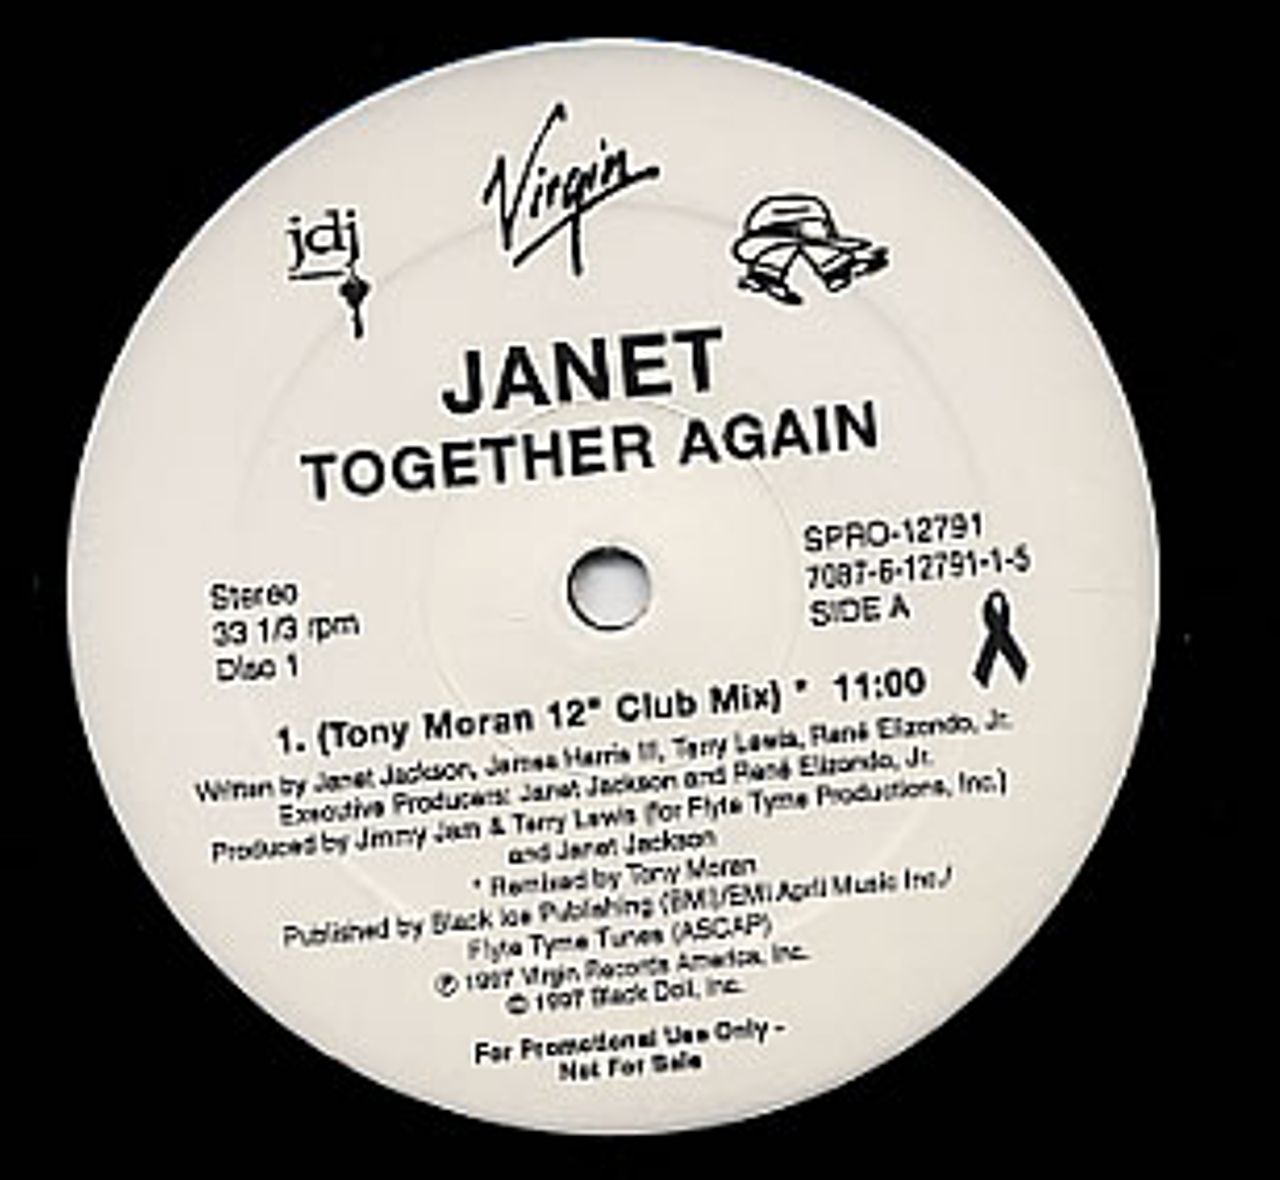 1990s Vinyl 12" Singles. Remixes, Extended Mixes, Dance Mix, Disco Mix - Twelve inch singles